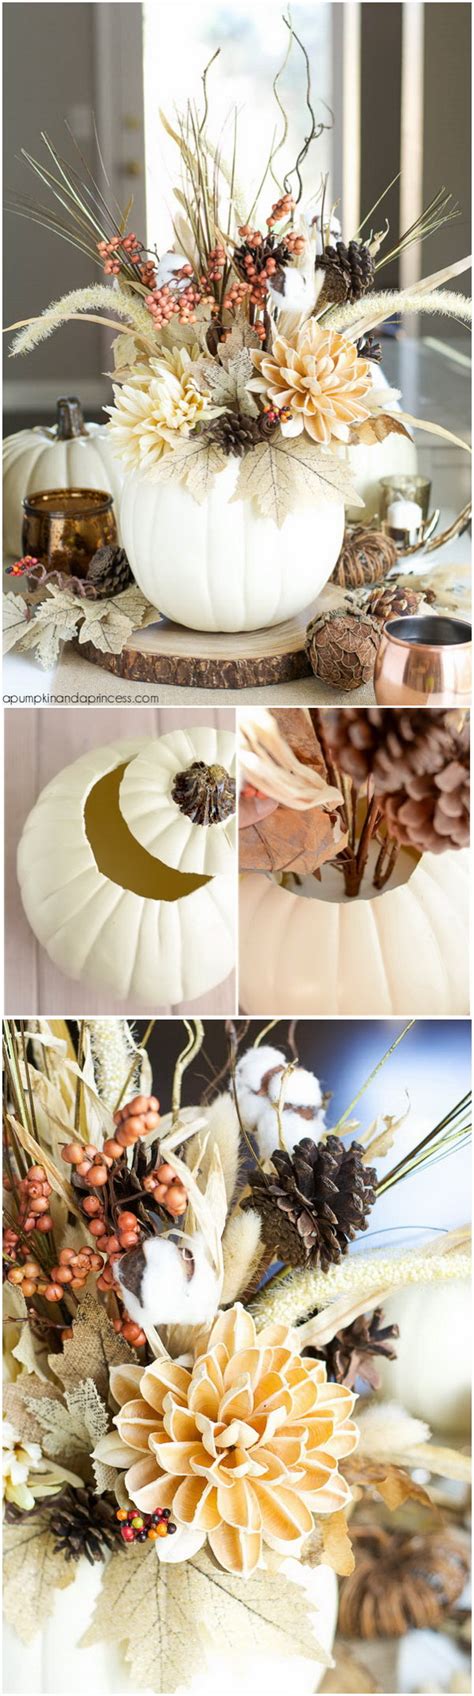 40 Beautiful Diy Rustic Decoration Ideas For Fall